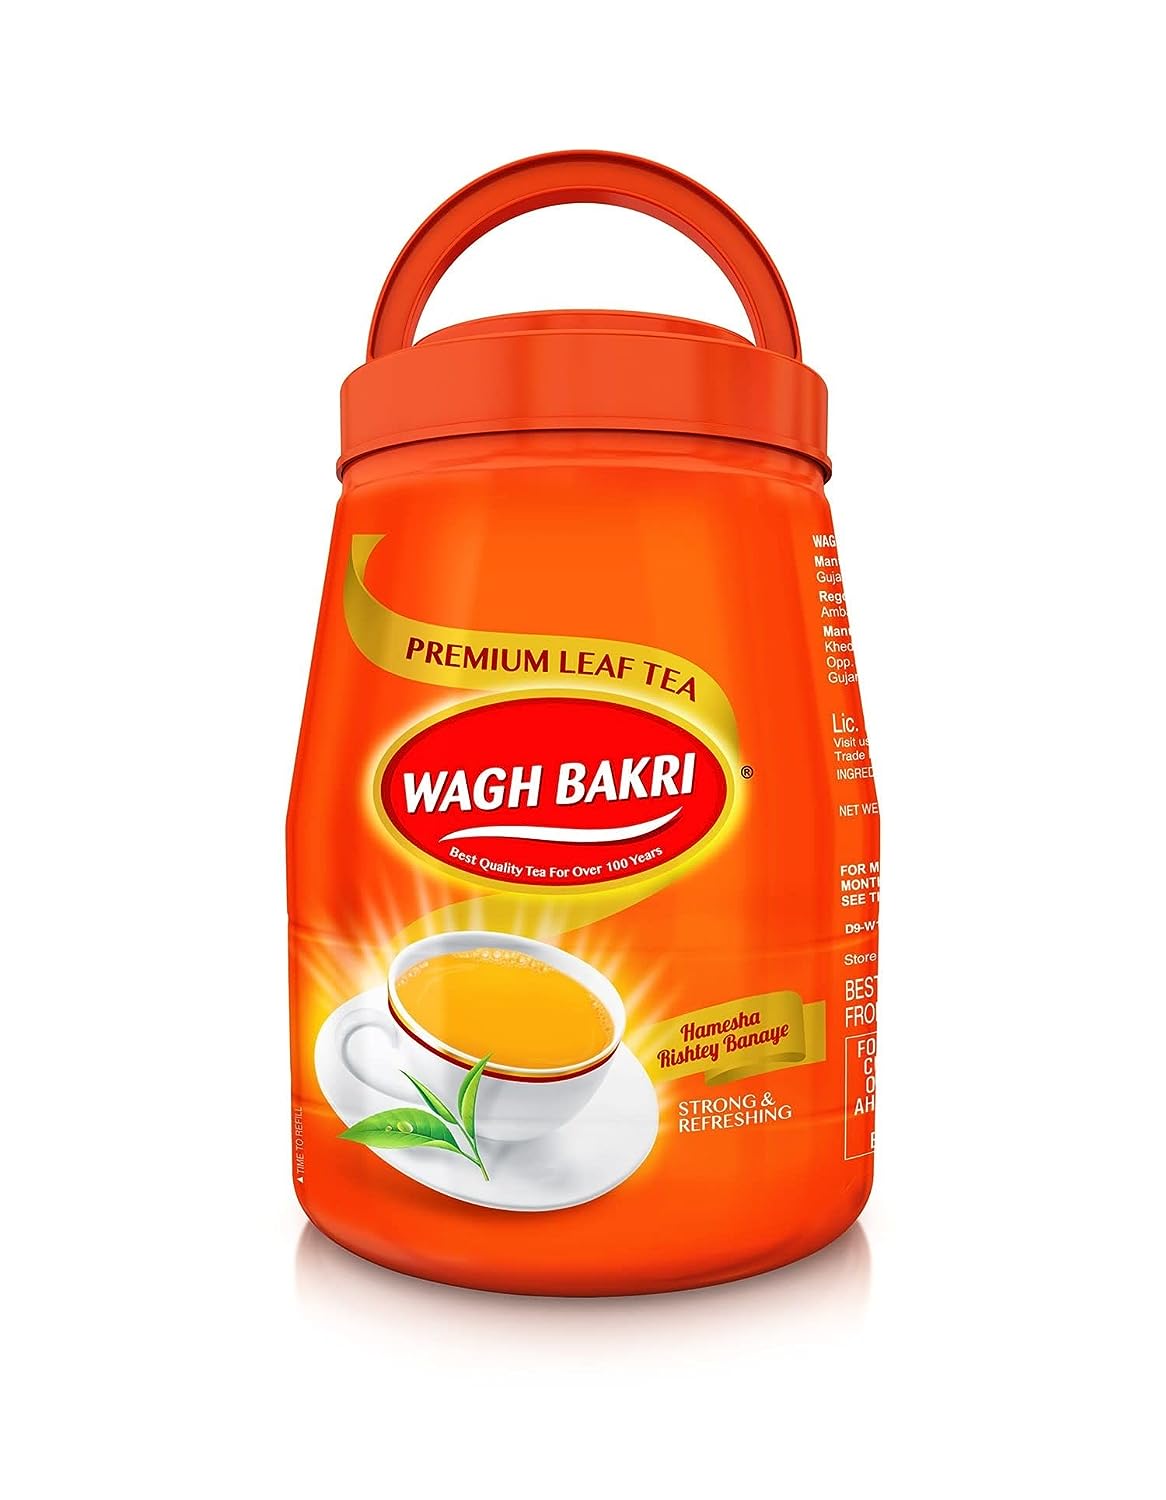 Wagh Bakri Special International Blend Premium Tea Leaves